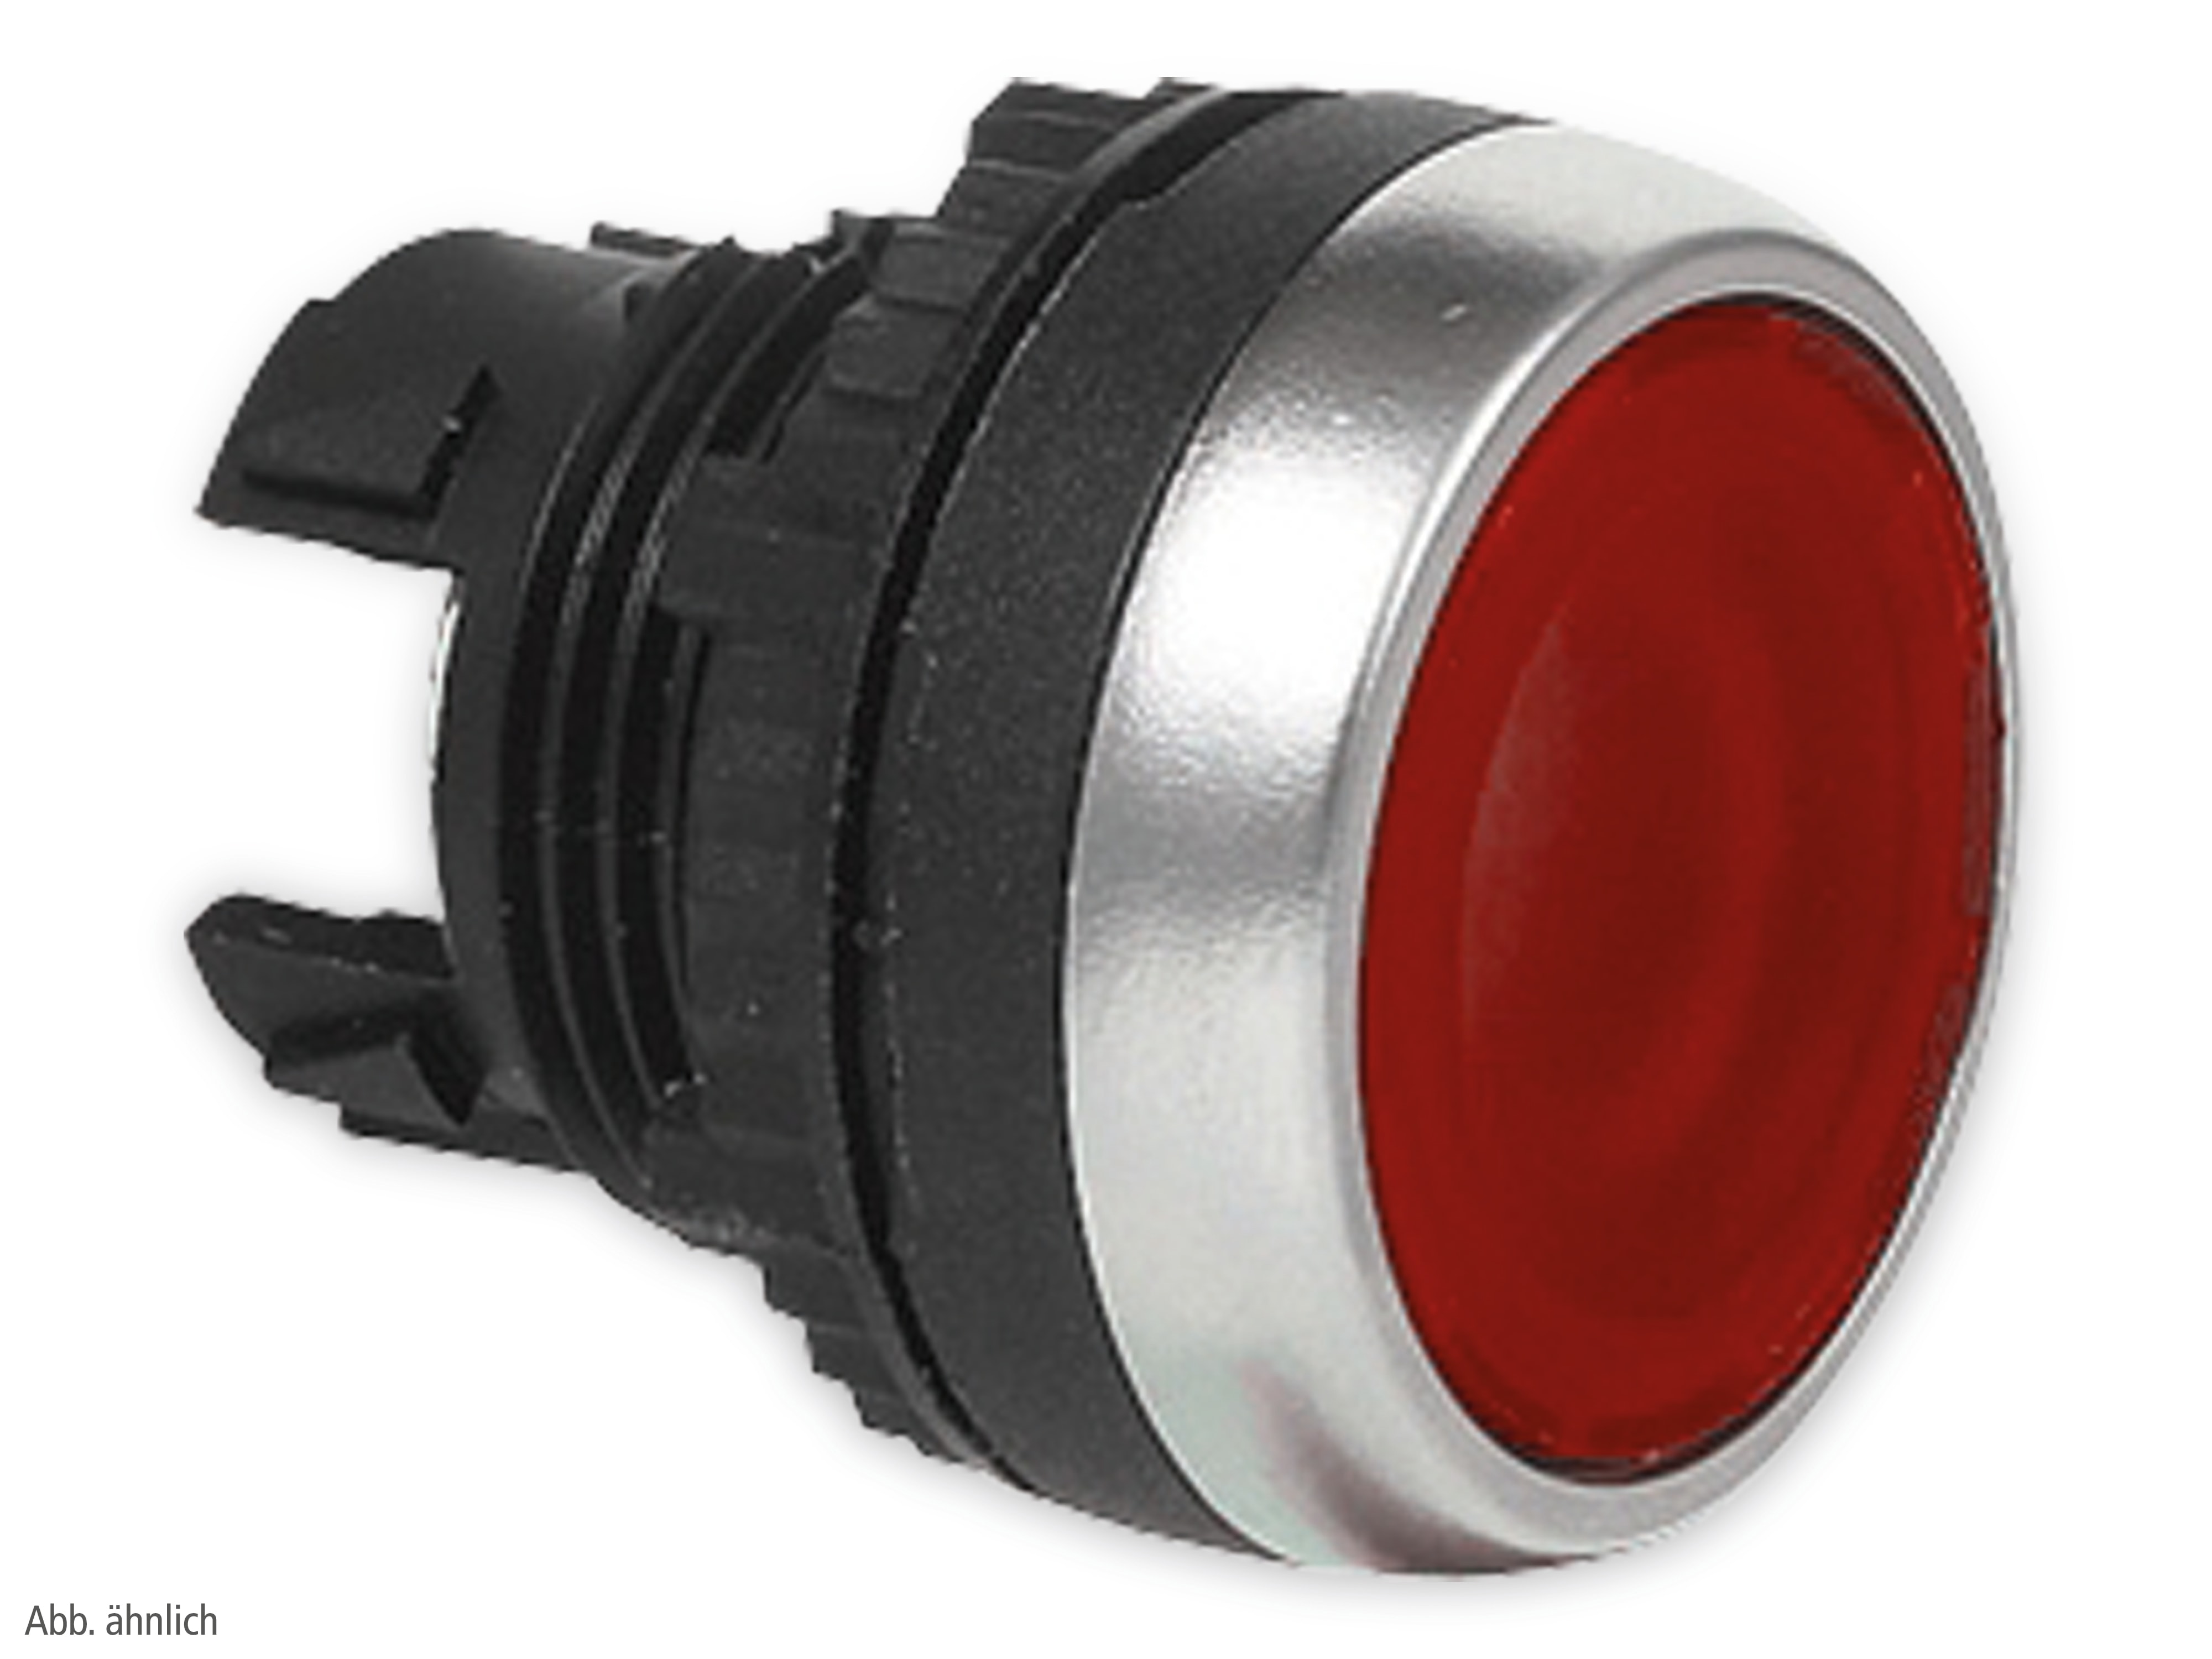 BACO Befehls- und Meldegeräte, L21CH10, Druckschalter flach, beleuchtbar, rot, 22 mm